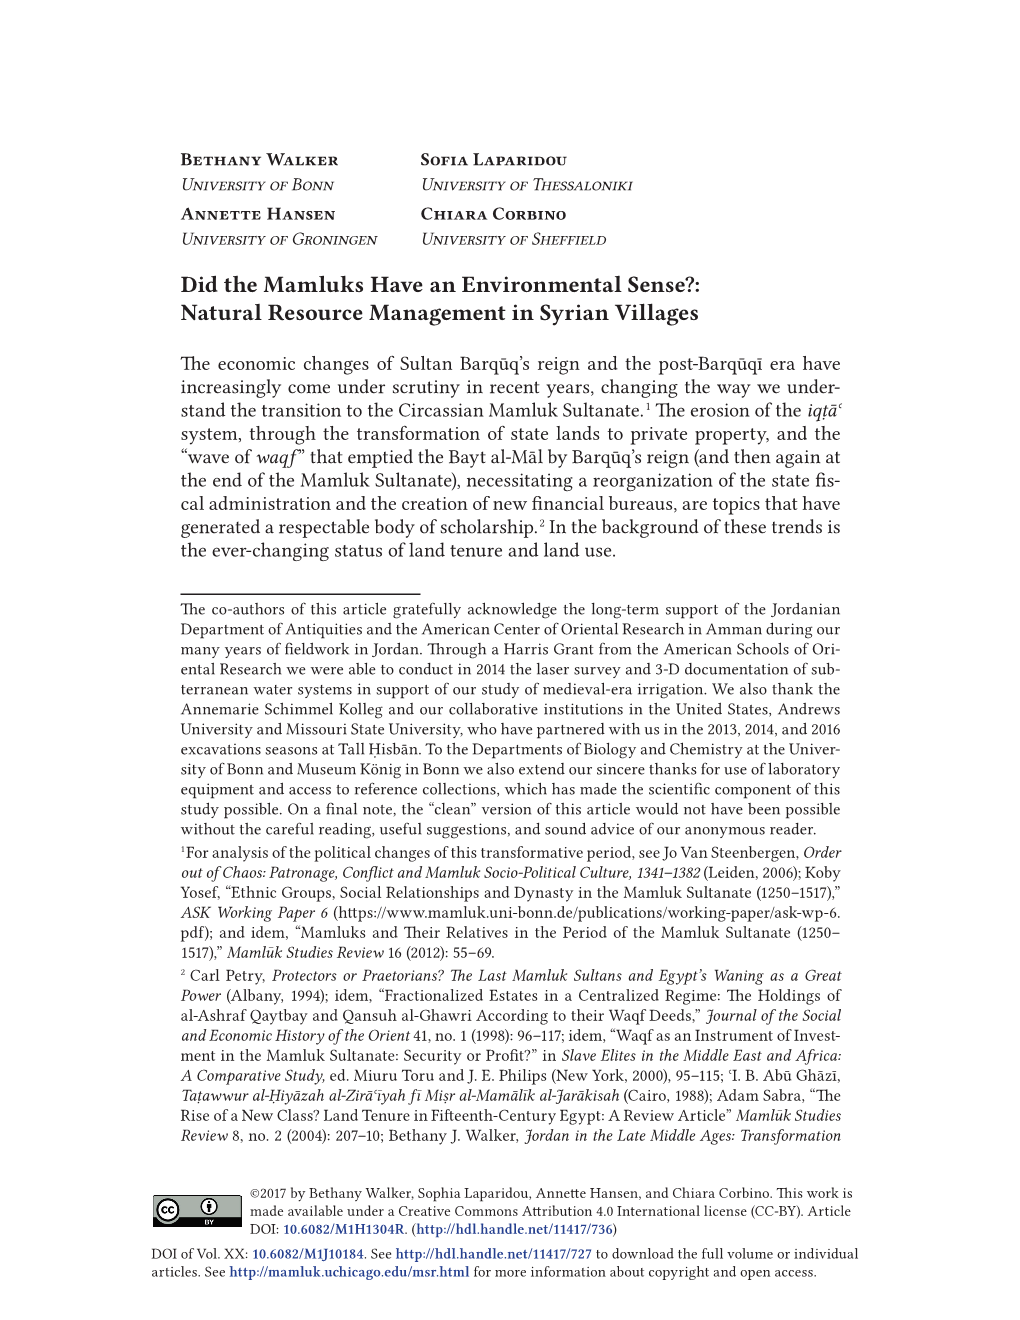 Natural Resource Management in Syrian Villages (MSR XX, 2017)